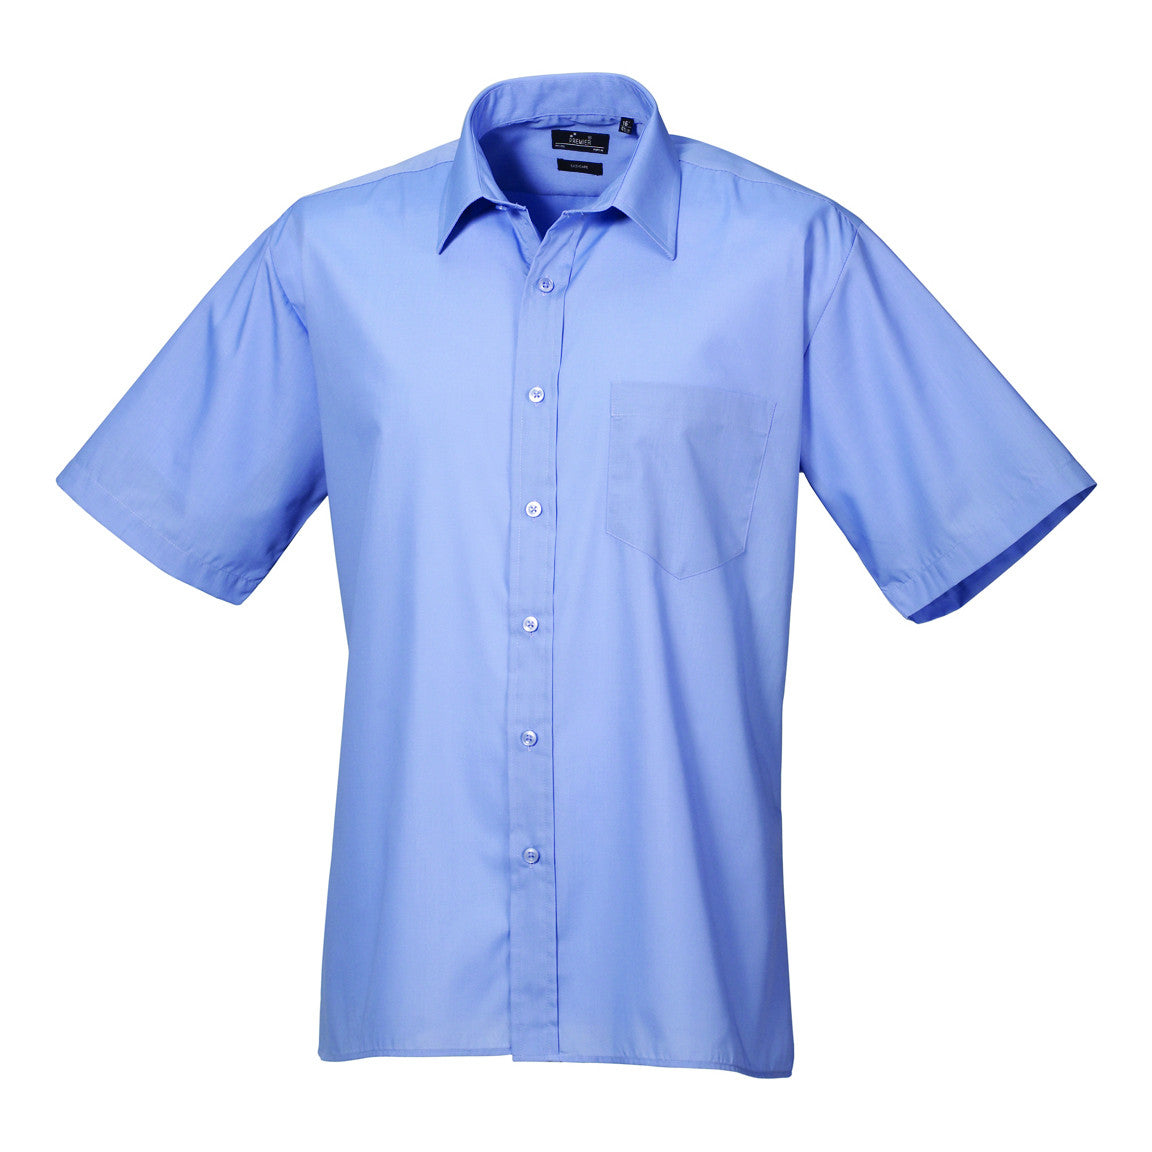 Premier Poplin Shirts (Sapphire, Turquoise, Light Blue, Mid Blue, Royal) - peterdrew.com
 - 3